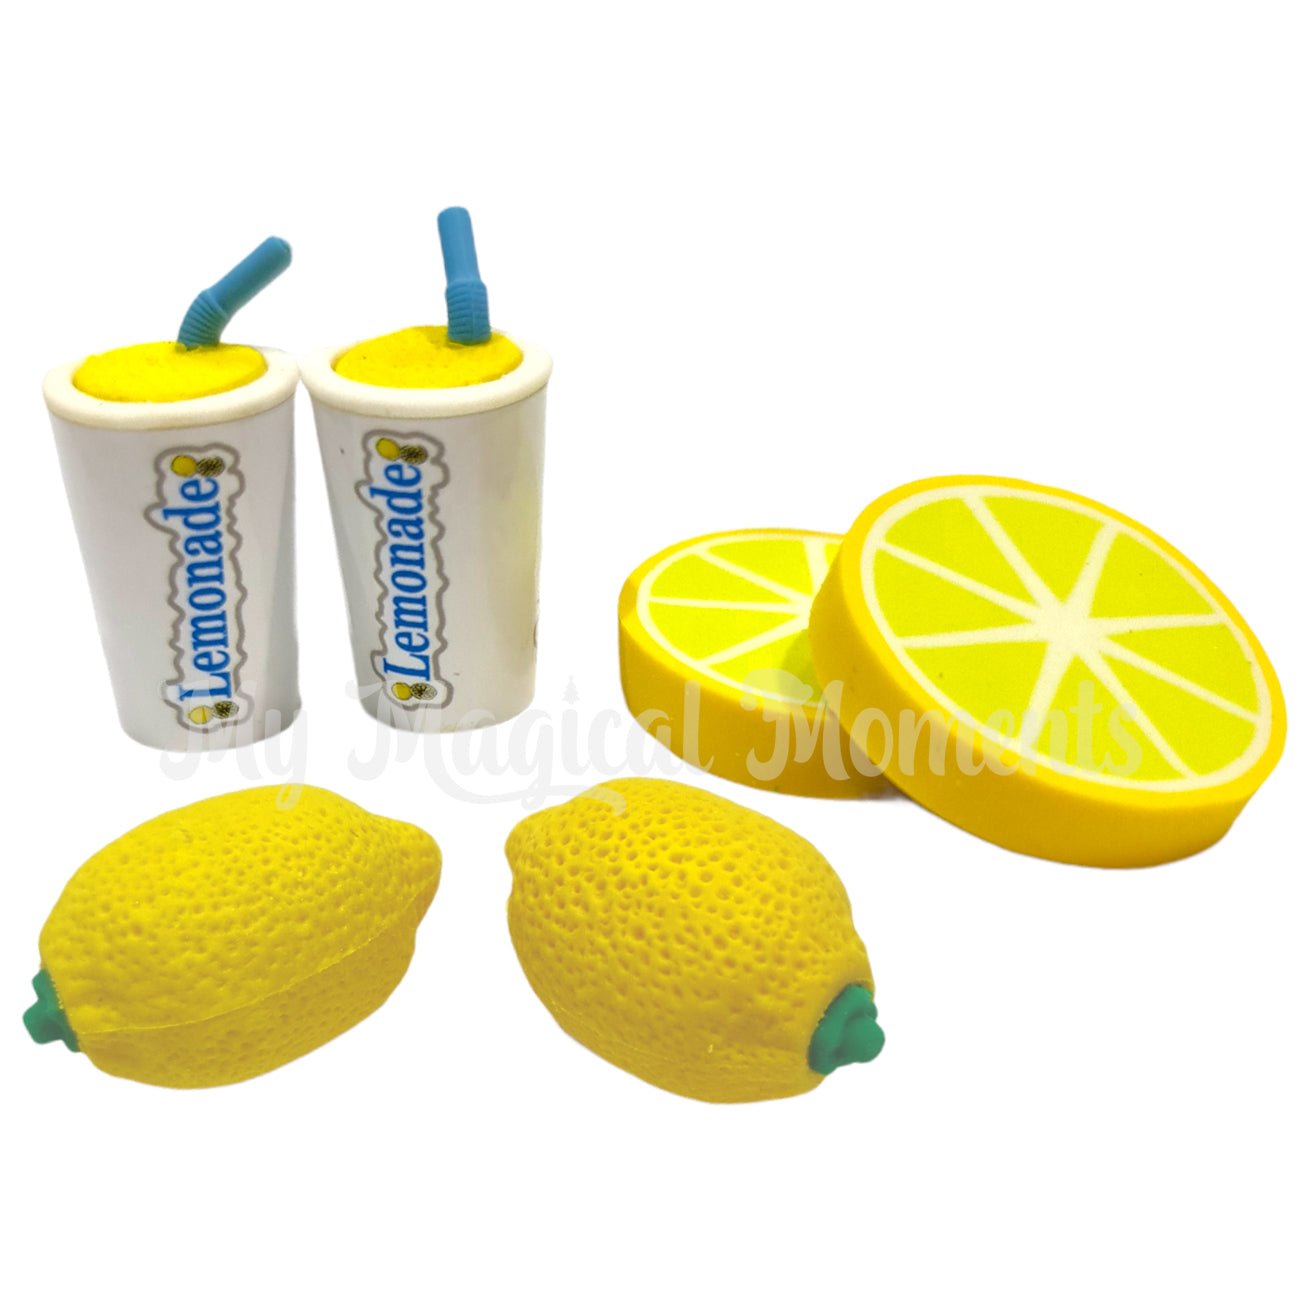 Miniature lemonade set, includes elf sized lemons, lemon slices and lemonade drinks